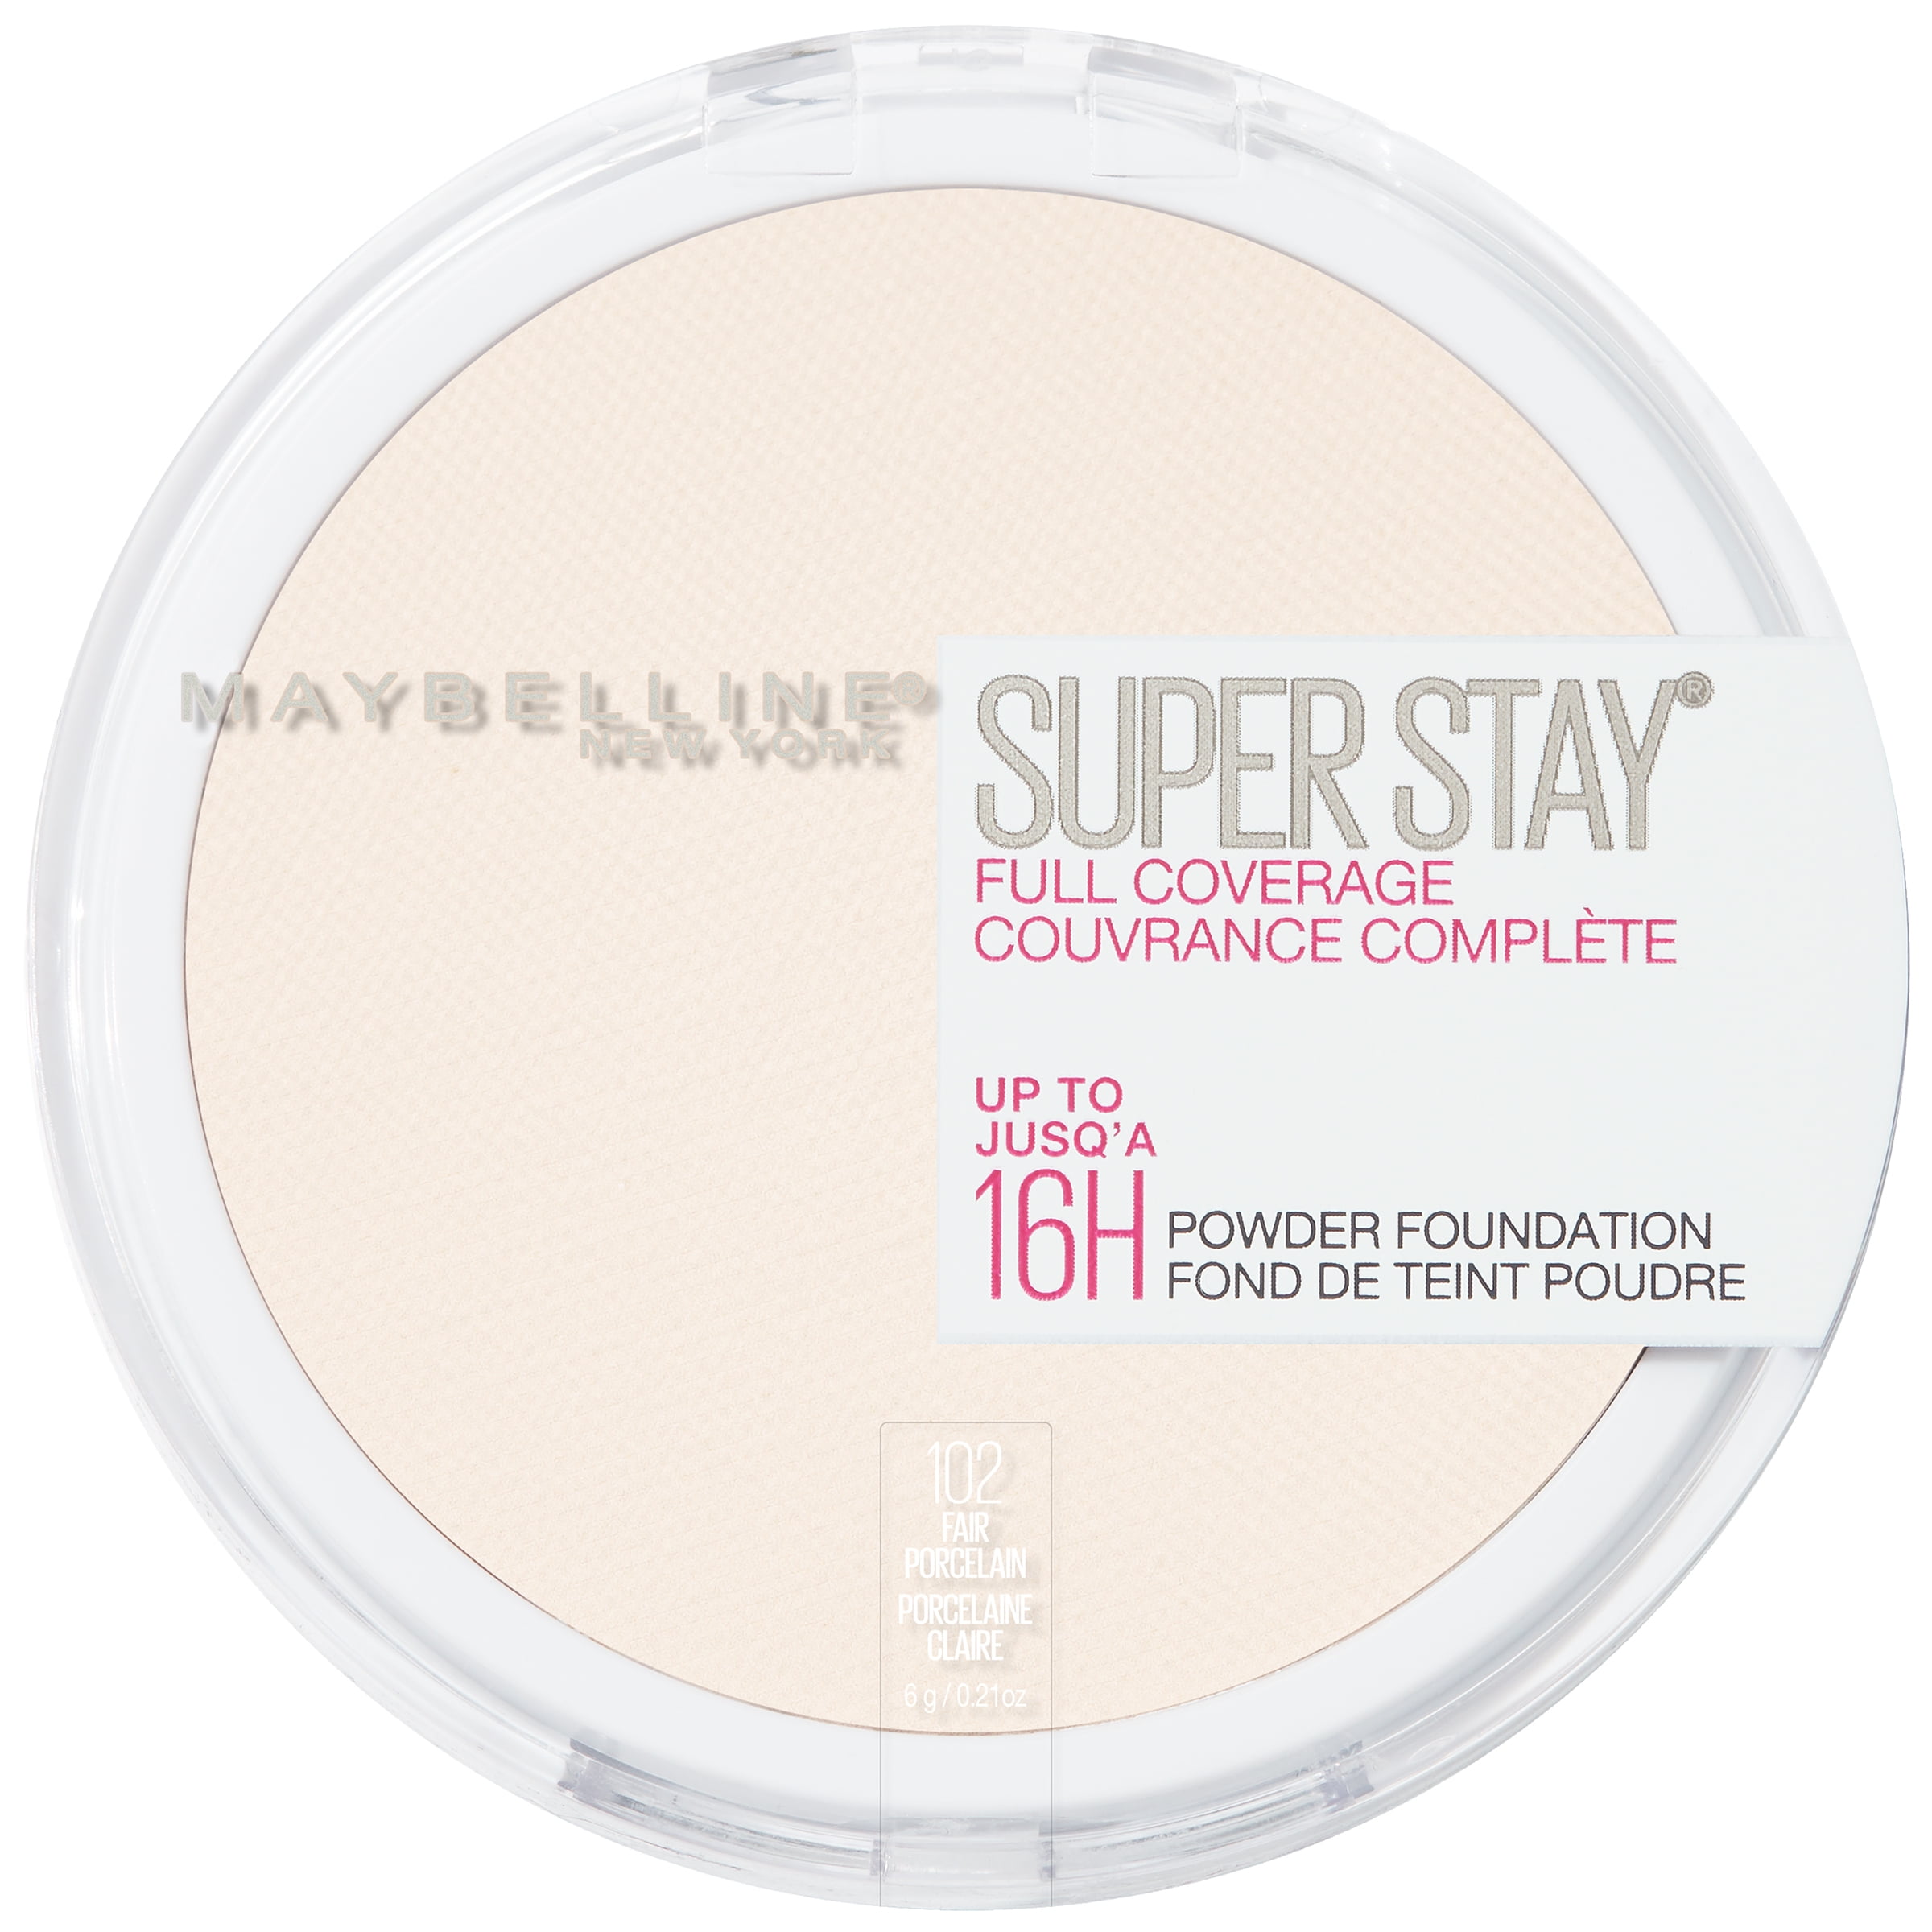 Maybelline Super Stay Full Coverage Powder Foundation Makeup, Matte Finish, Fair Porcelain, 0.21 oz